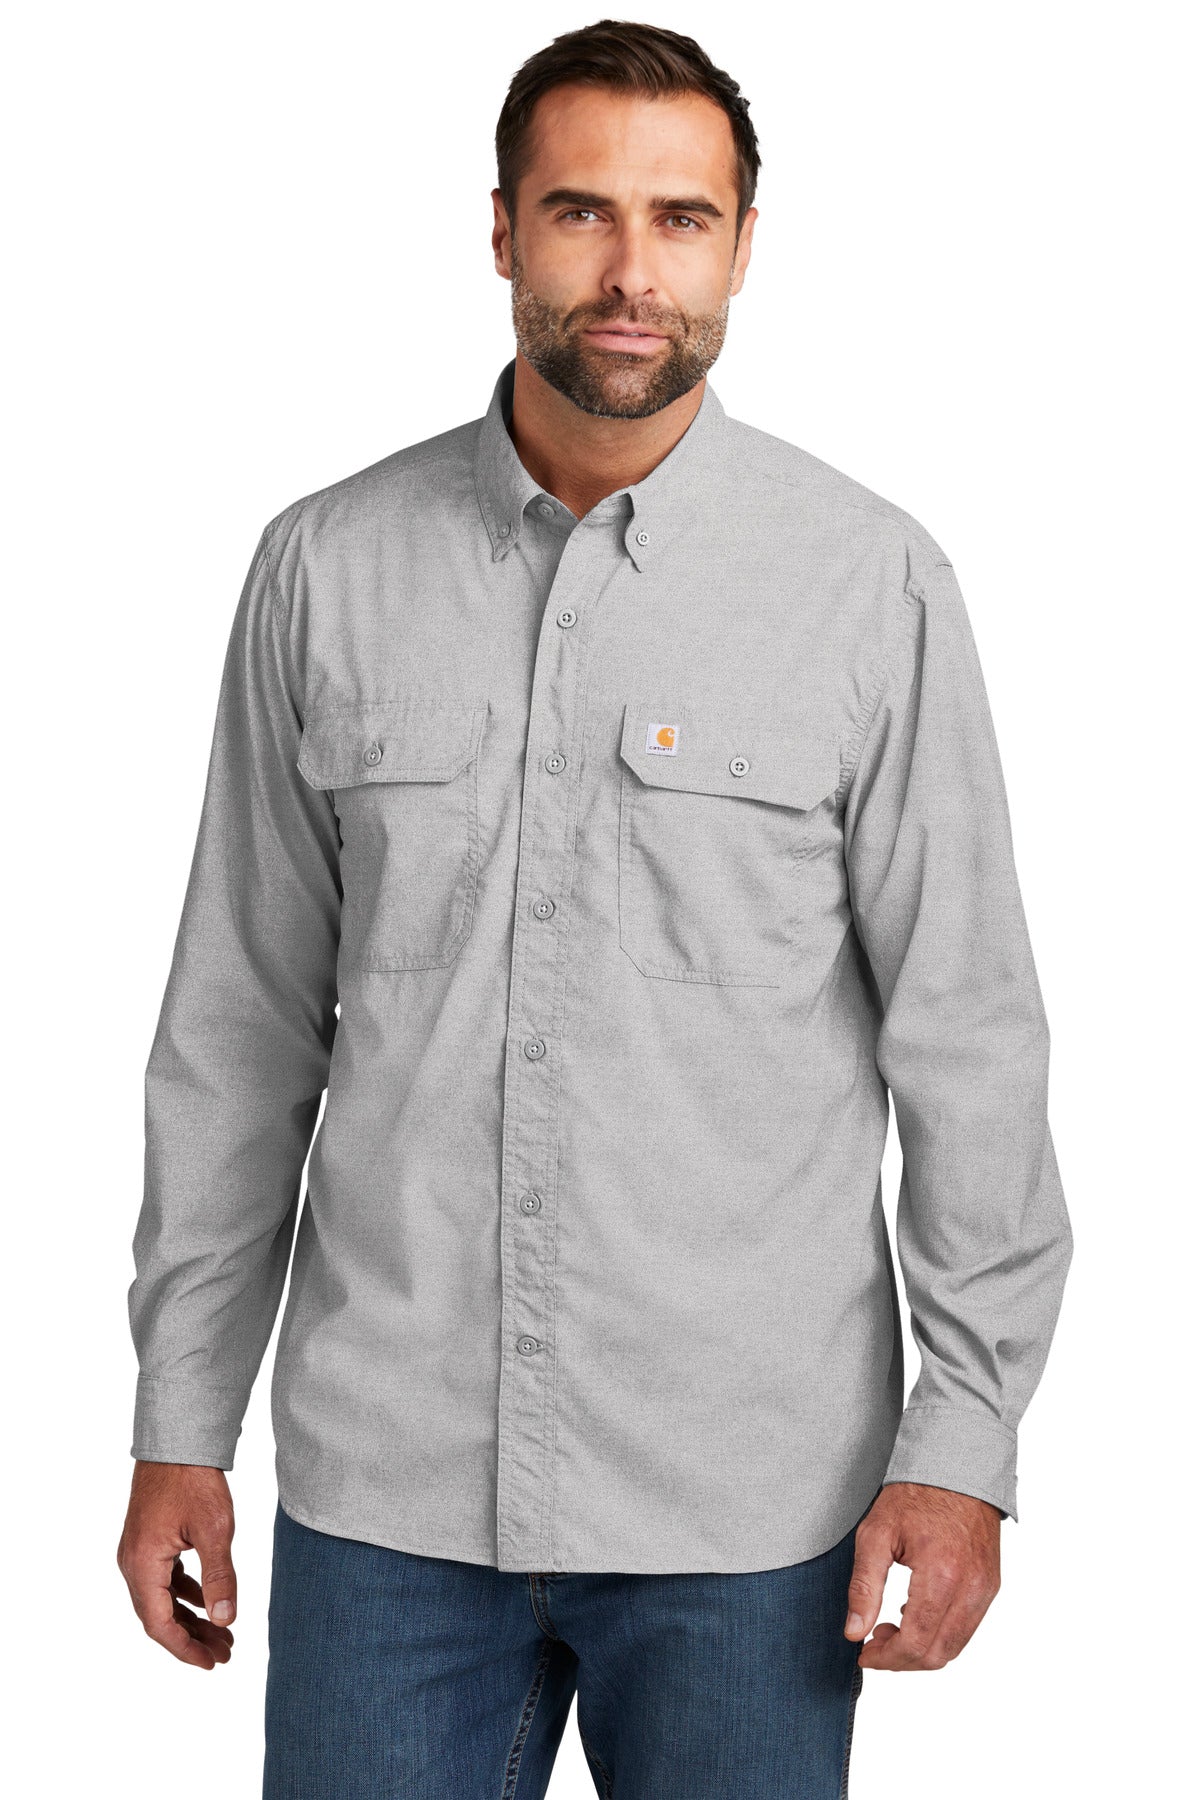 Carhartt Force® Solid Long Sleeve Shirt CT105291